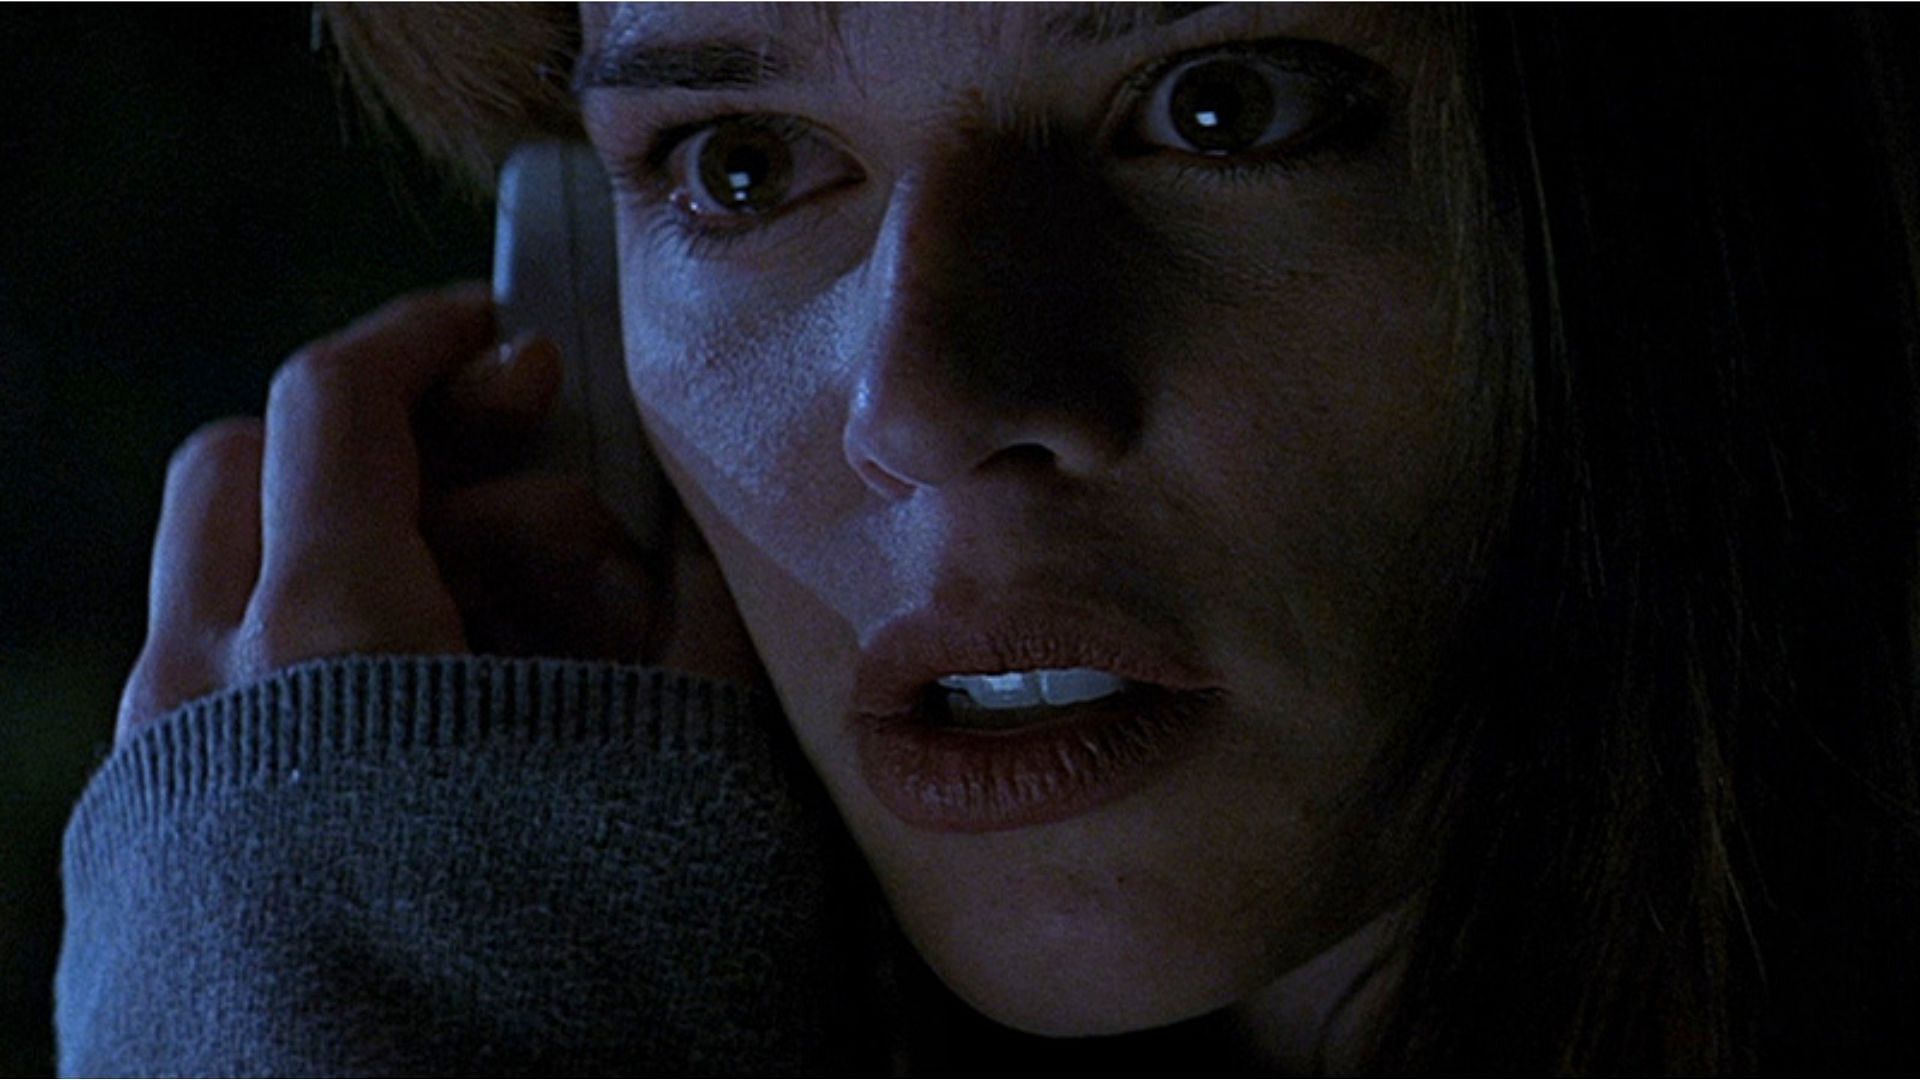 Scream 1996 (image via IMDB)